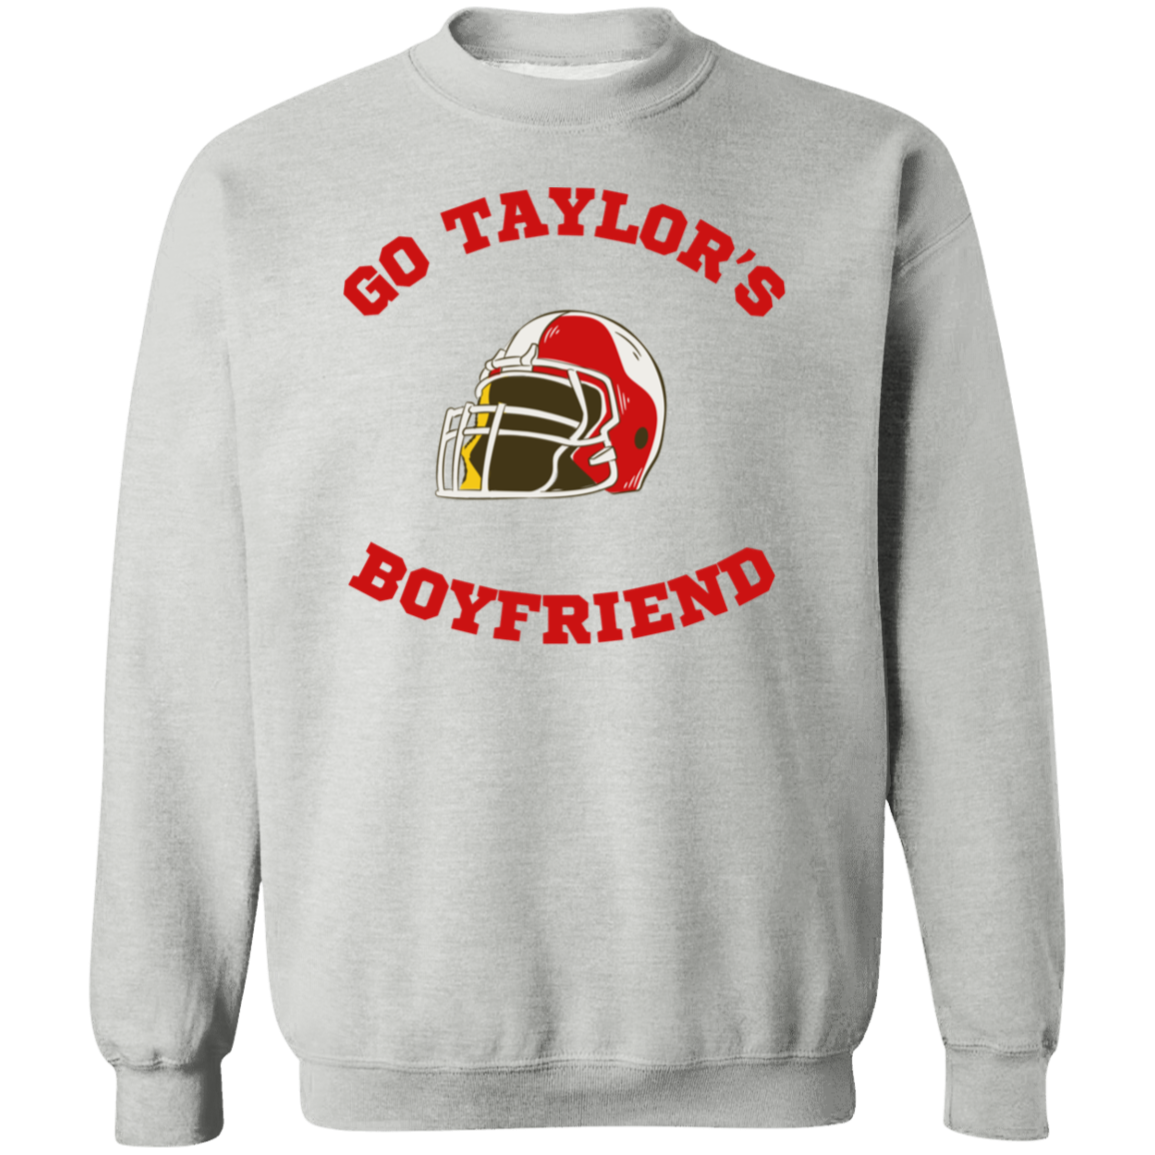 Go Taylor's Boyfriend Helmet